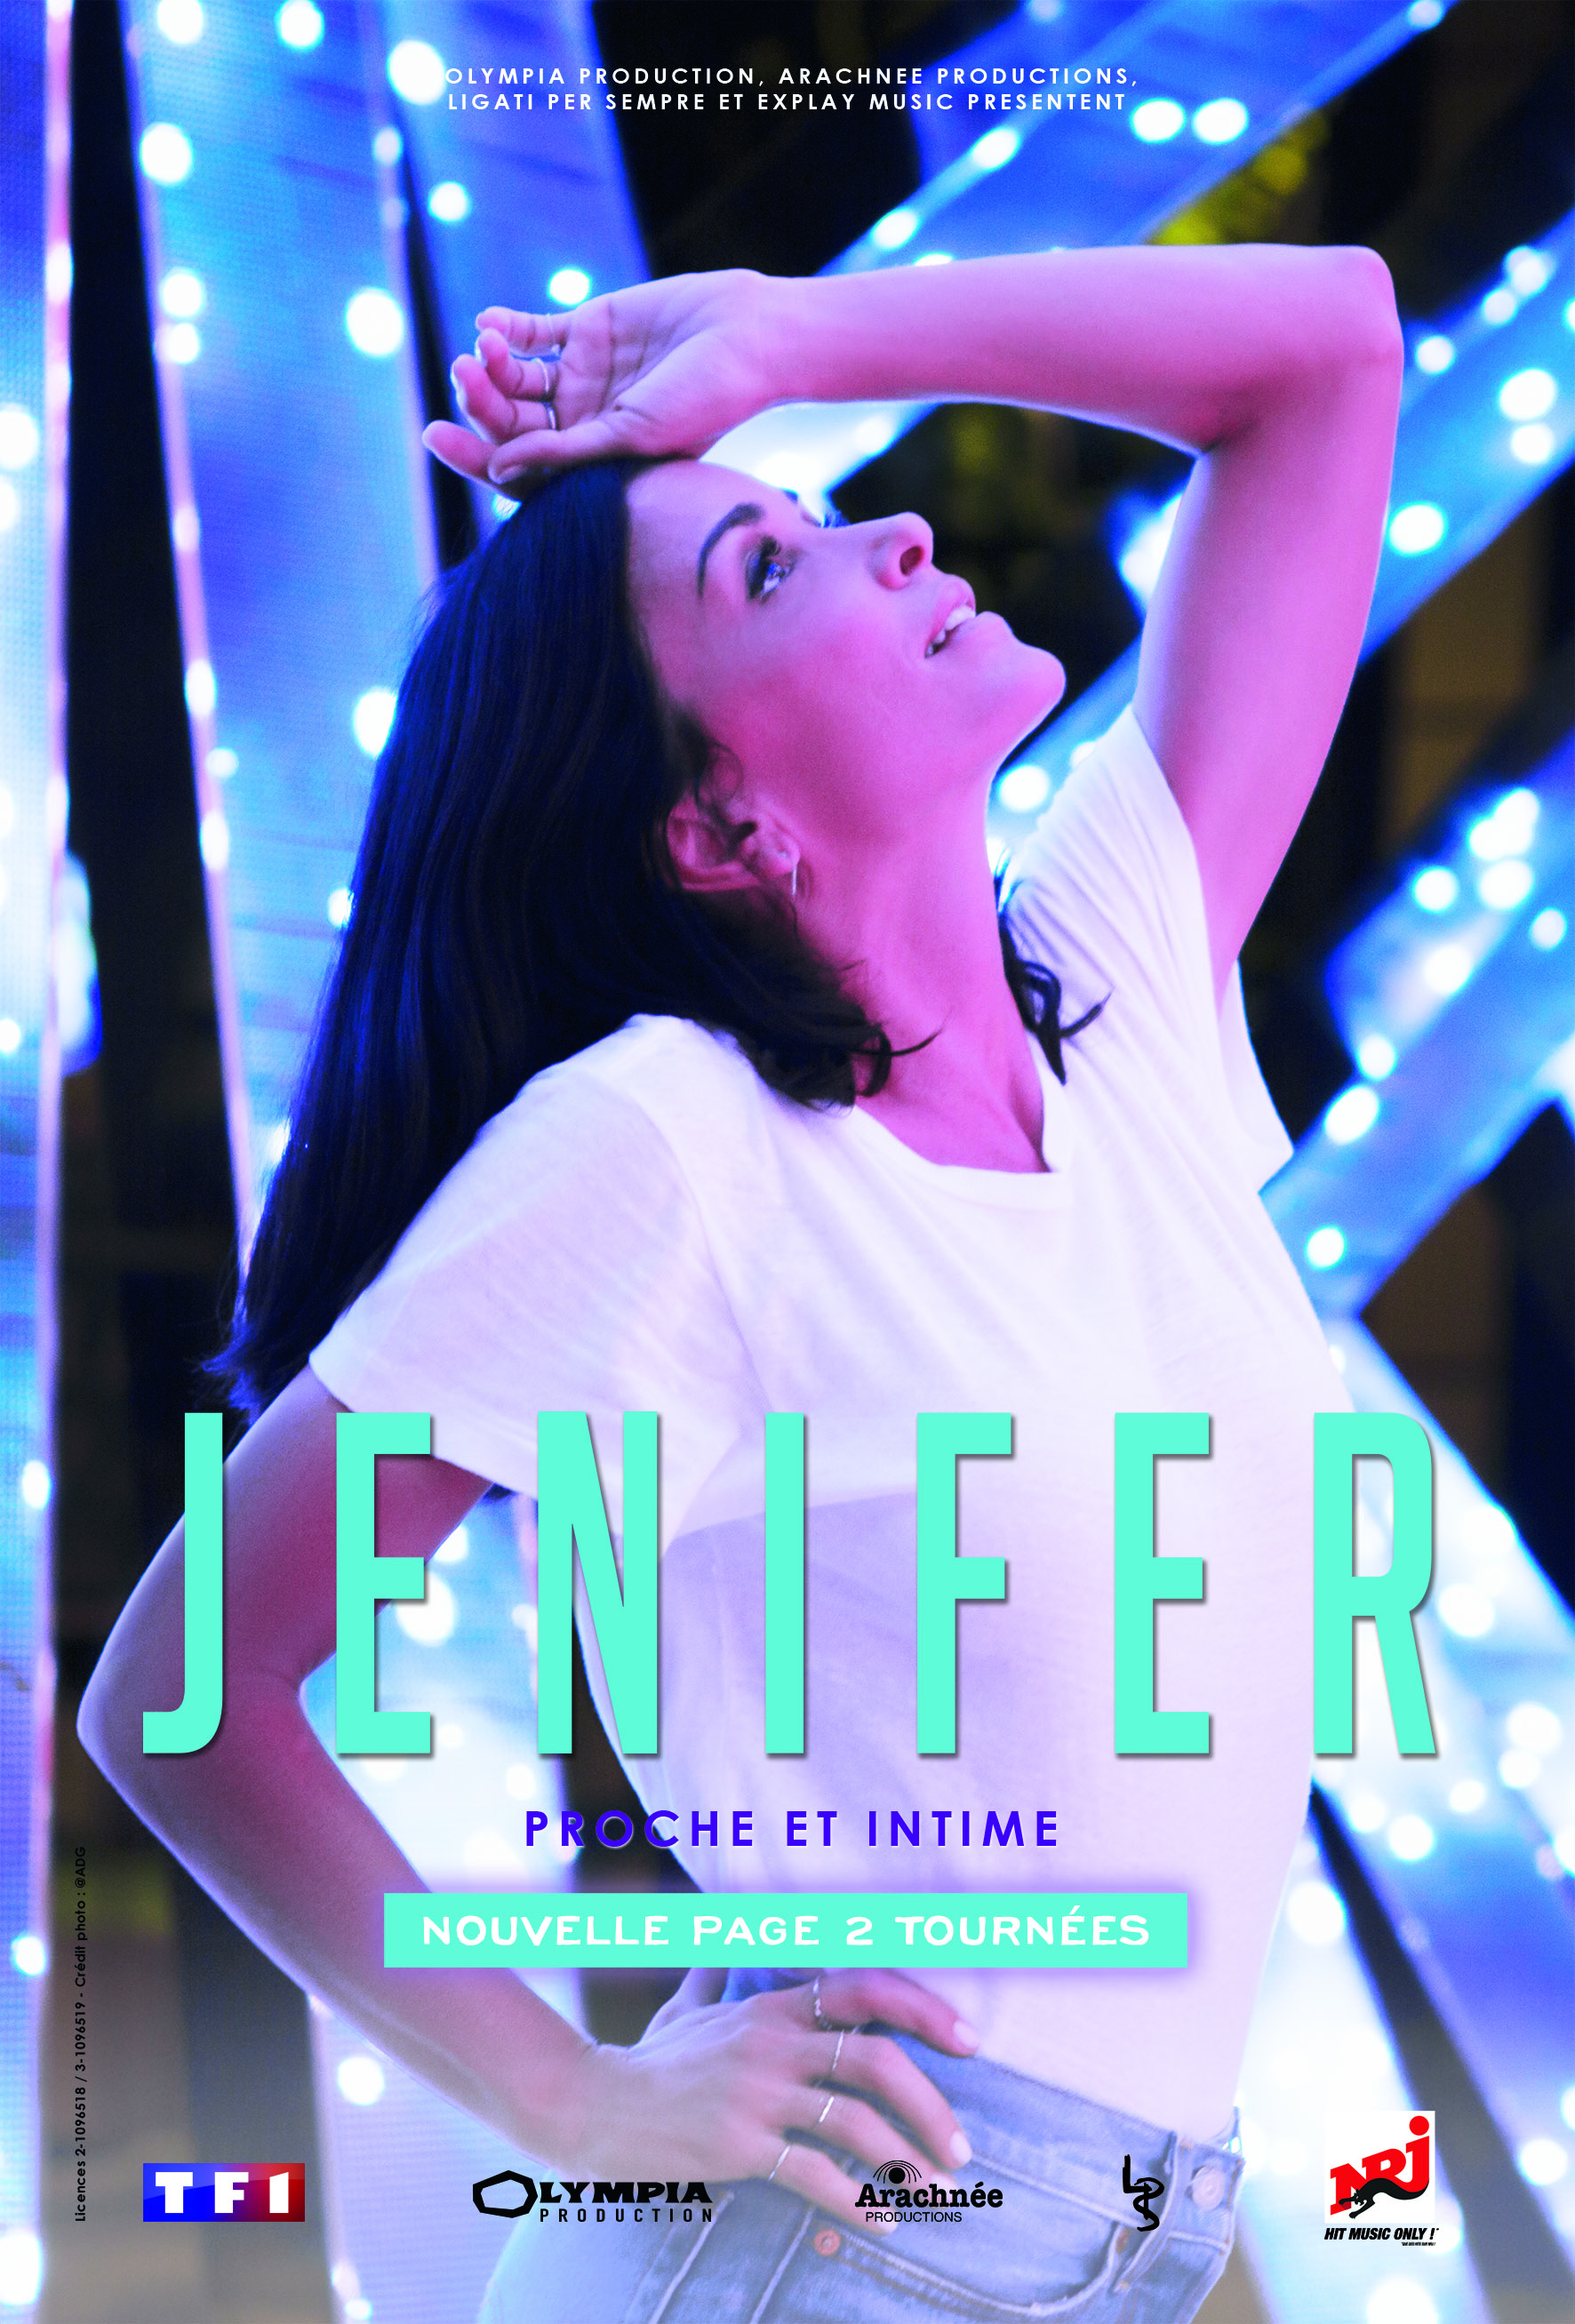 Jenifer - Proche et Intime mars 2019